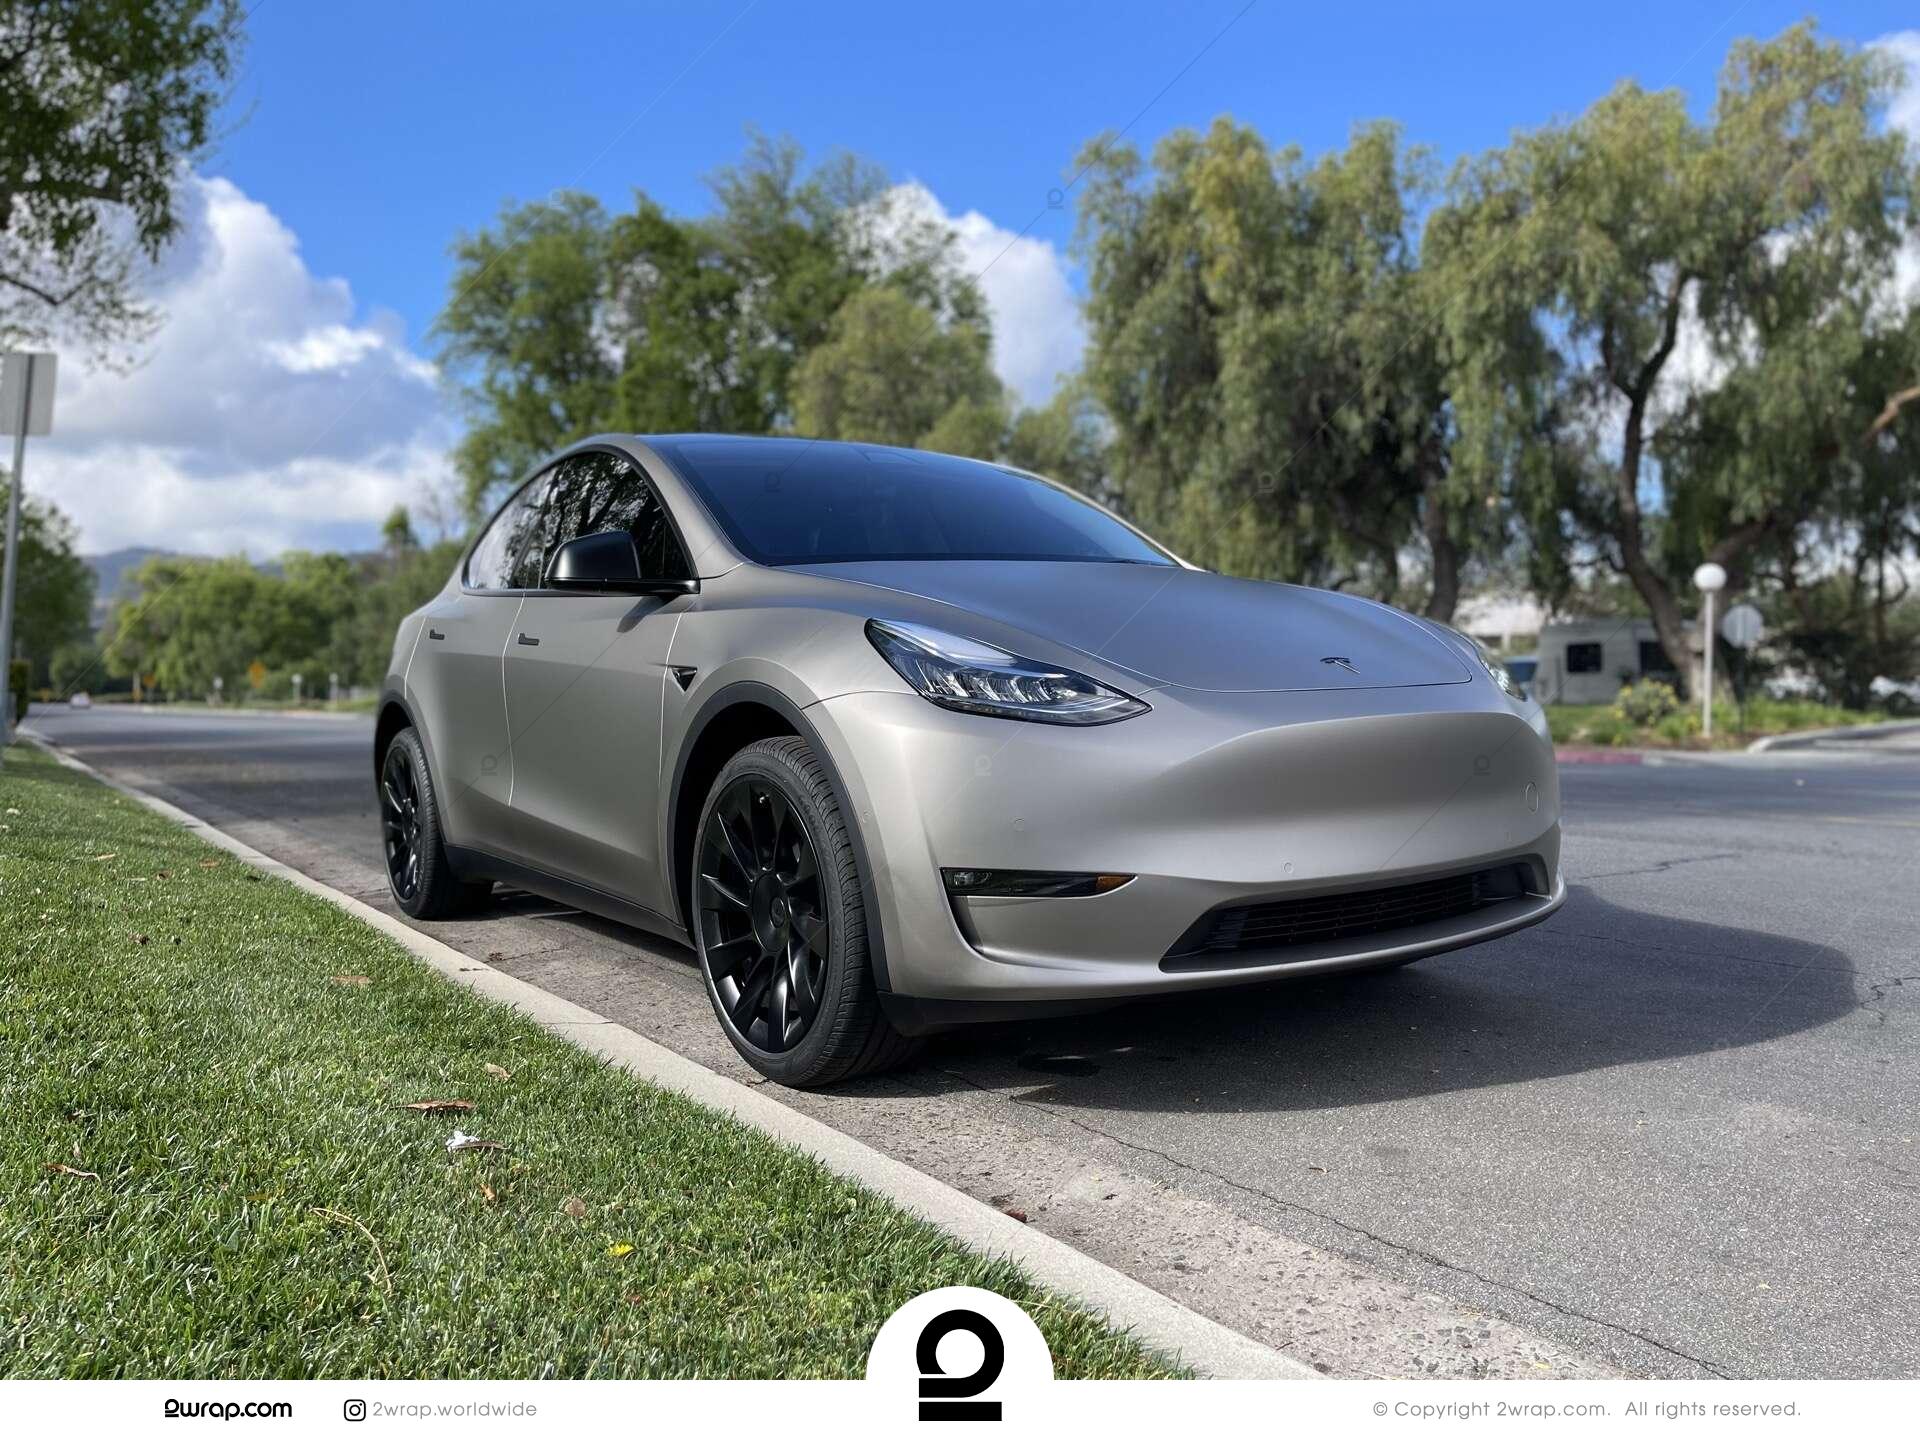 https://2wrap.com/wp-content/uploads/2022/03/Tesla-Model-Y-wrapped-in-3M-Matte-grey-Aluminum-16-1920x1440.jpeg?v=1646510168